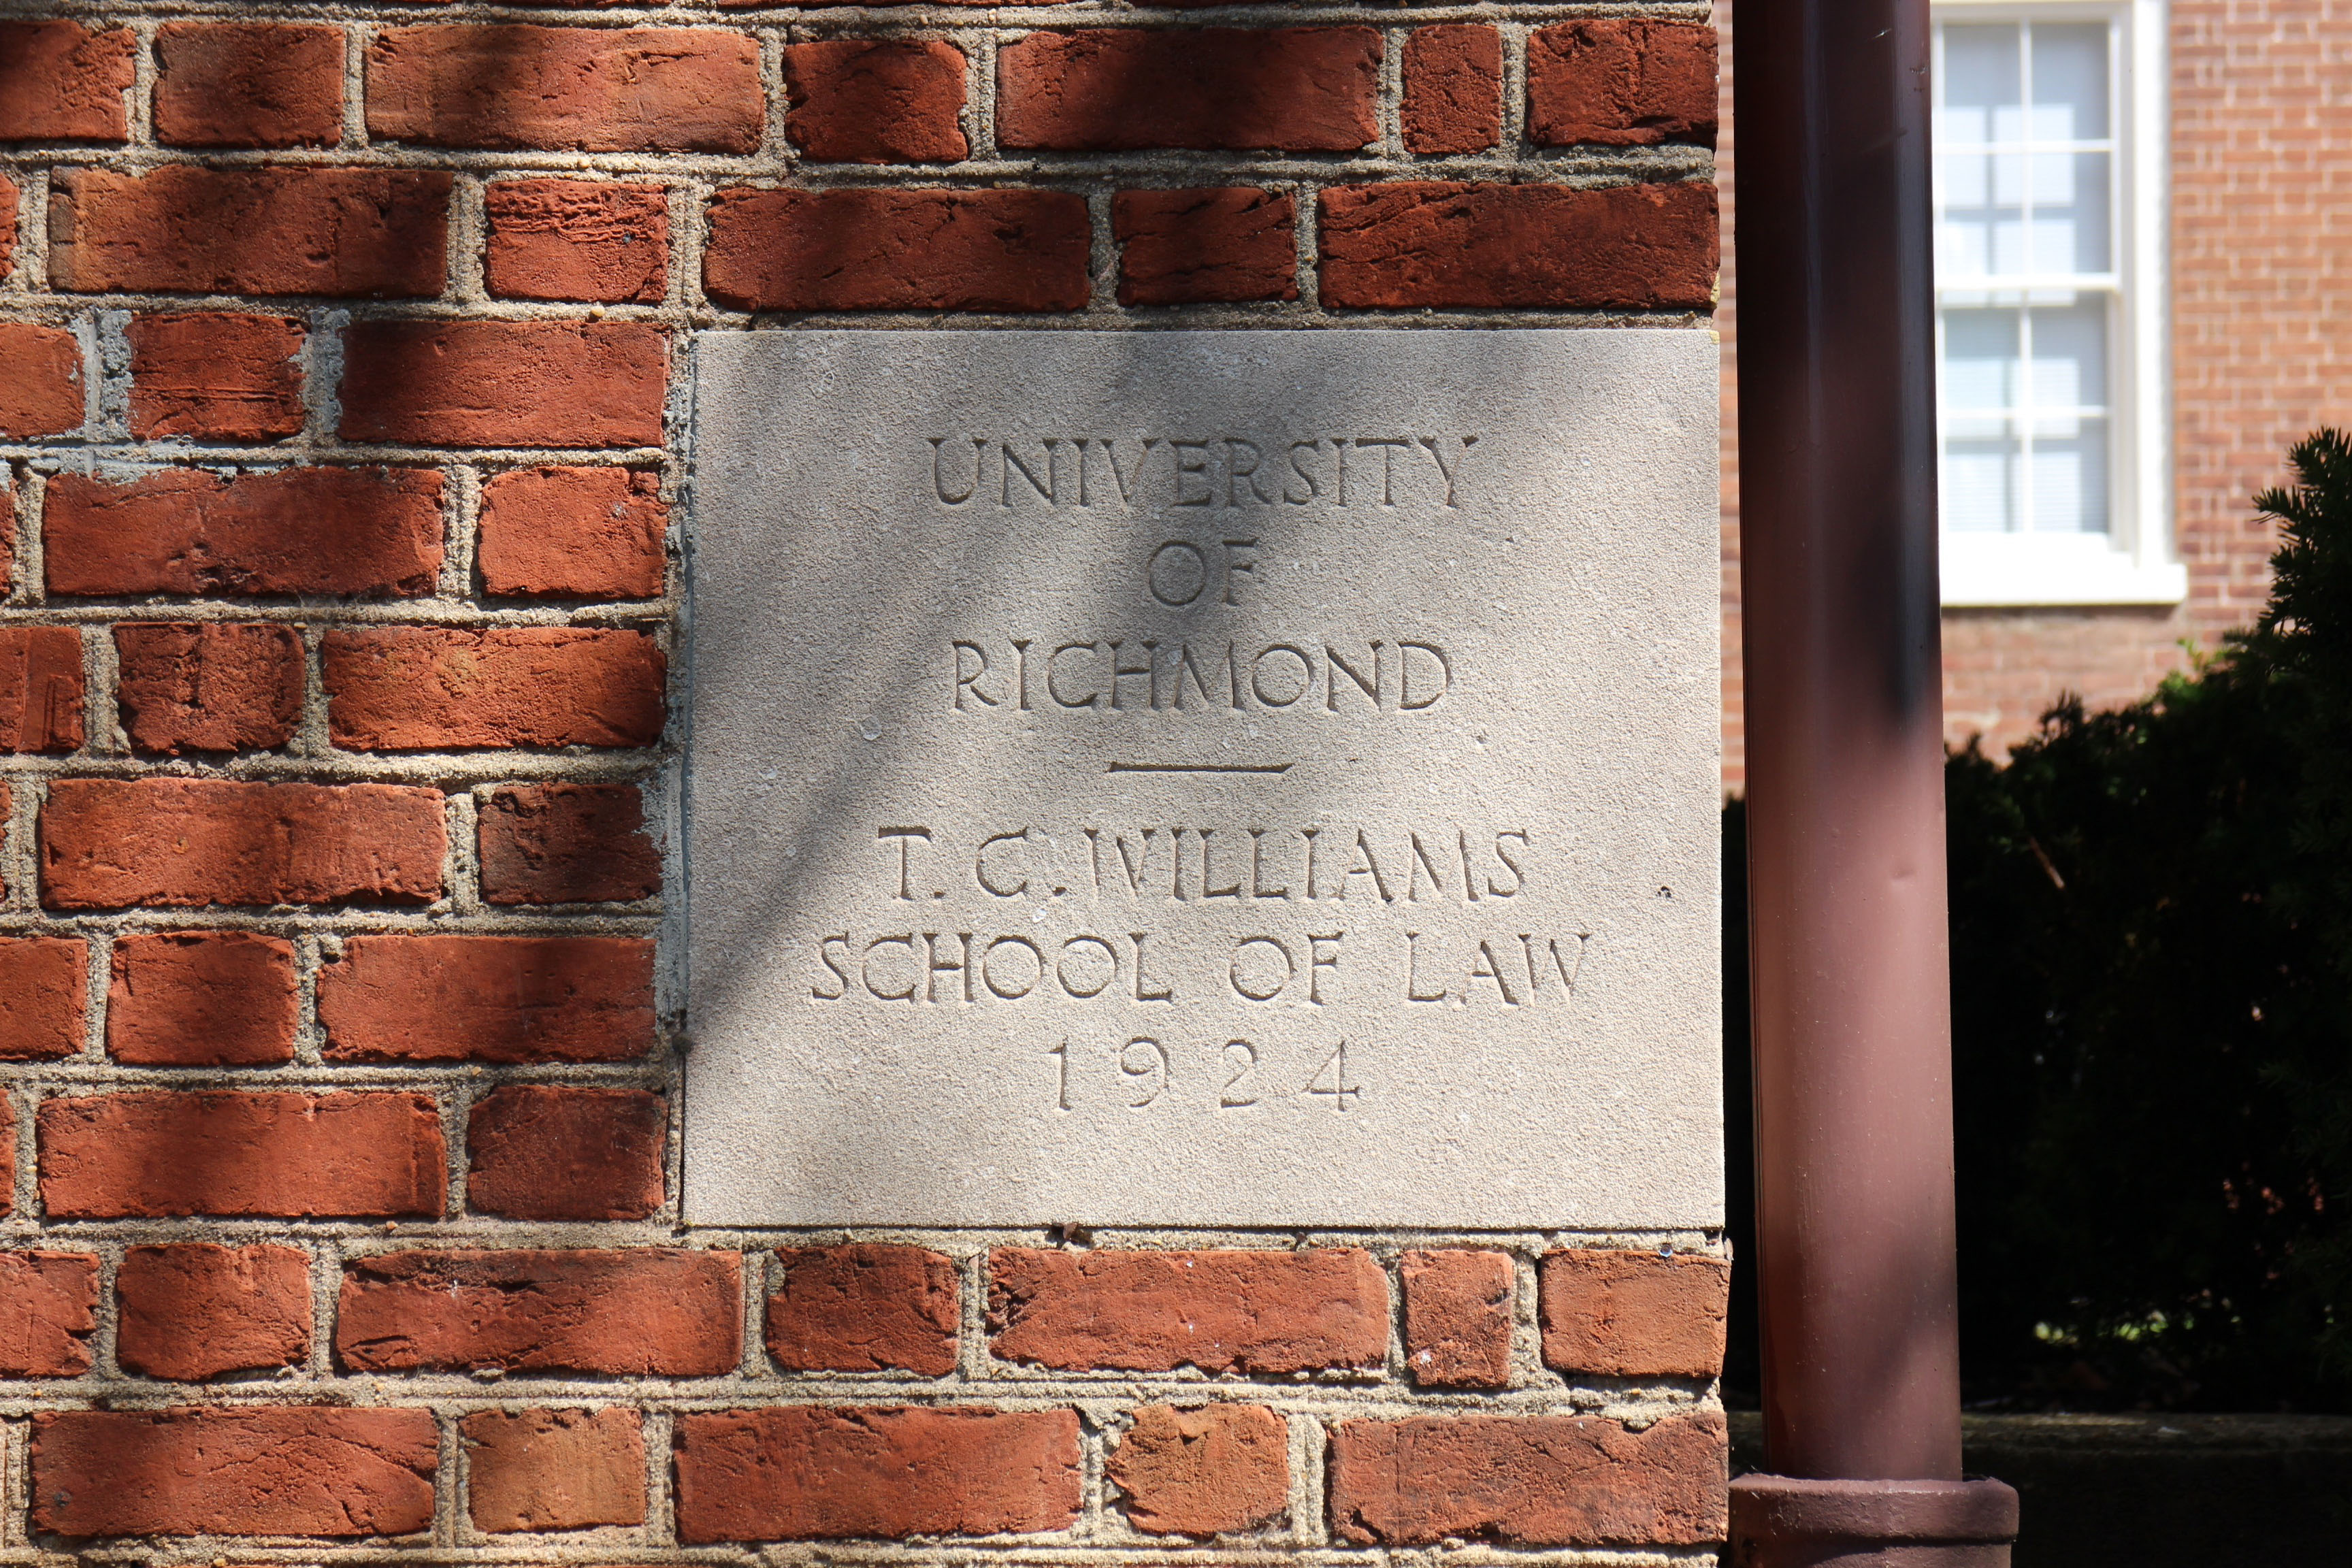 Plaque for T.C. Williams School of Law